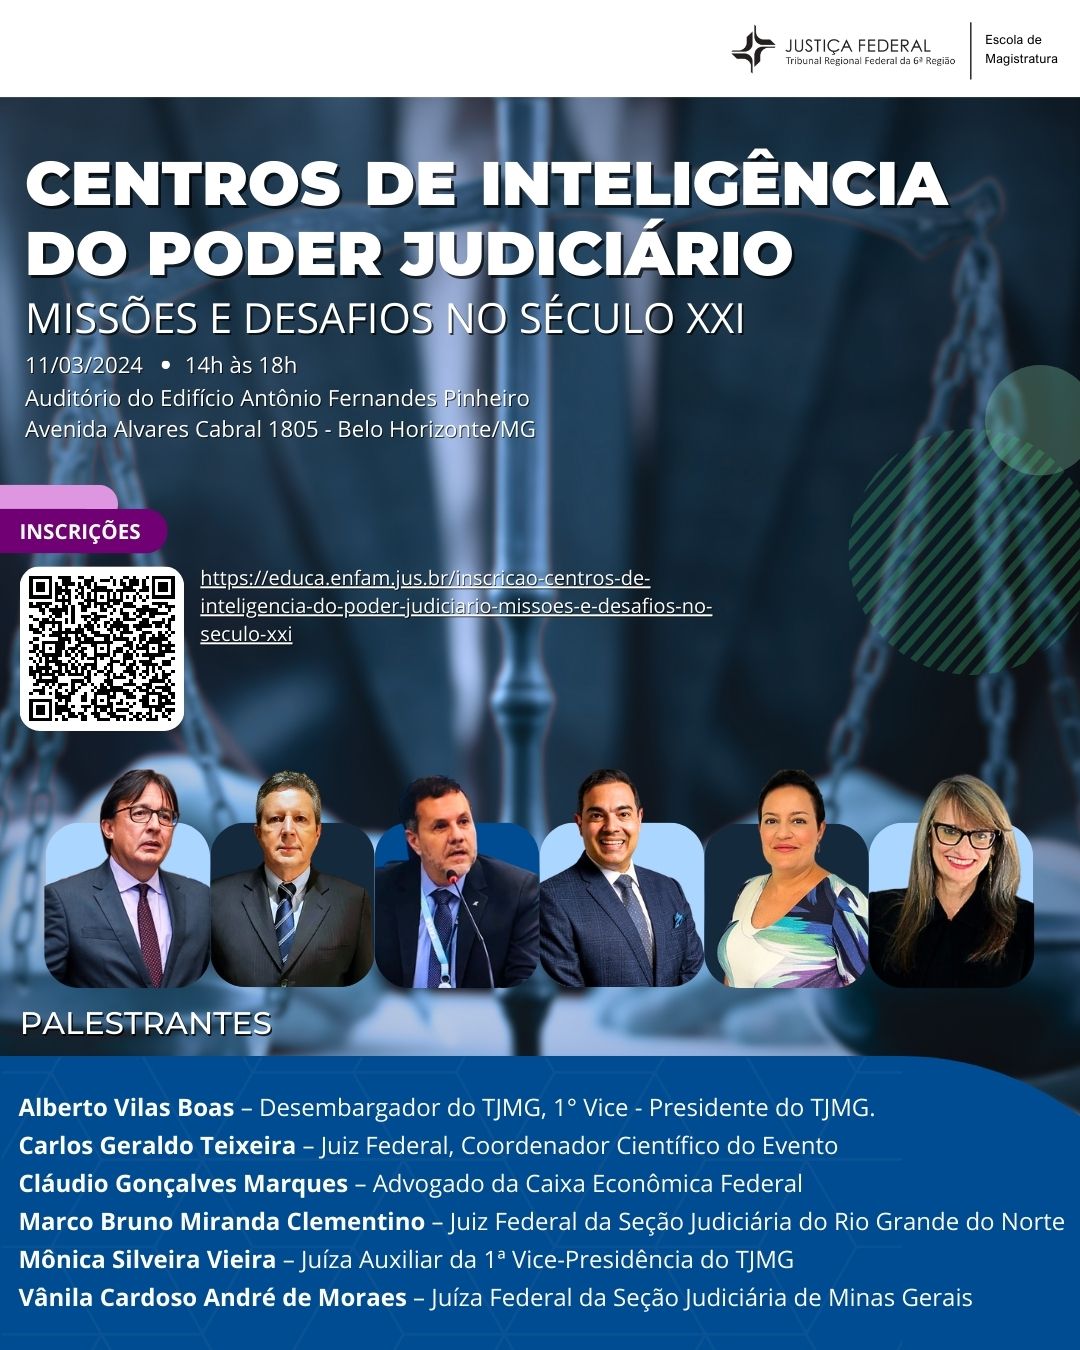 I_Centros-de-Inteligencia-do-Poder-Judiciario_Geral.jpg